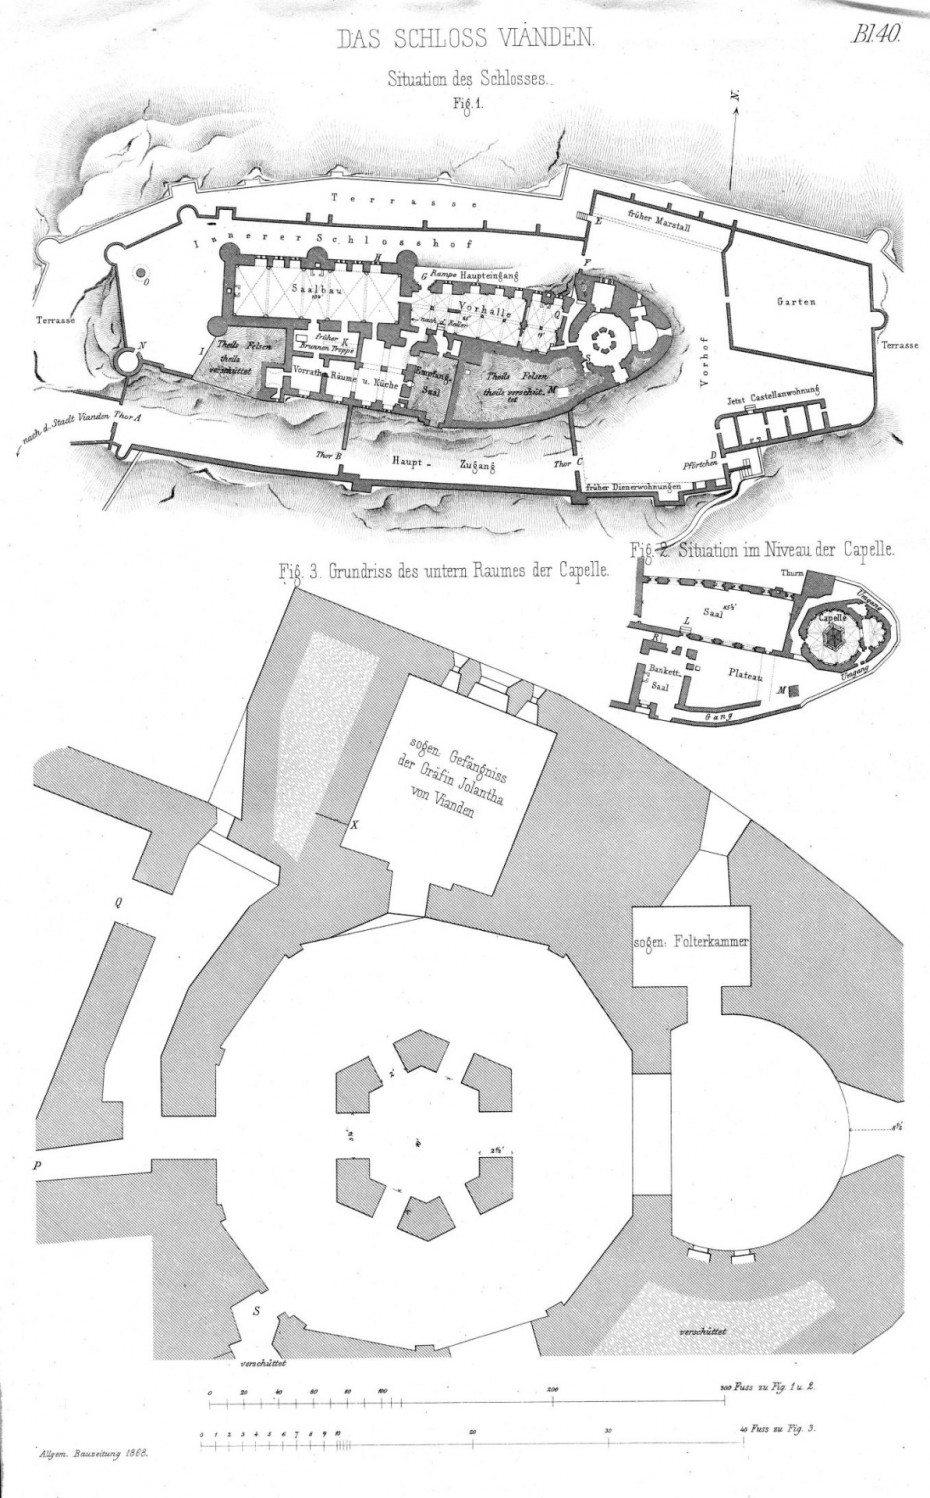 Plan du château de Vianden (Das Schloss Vianden)